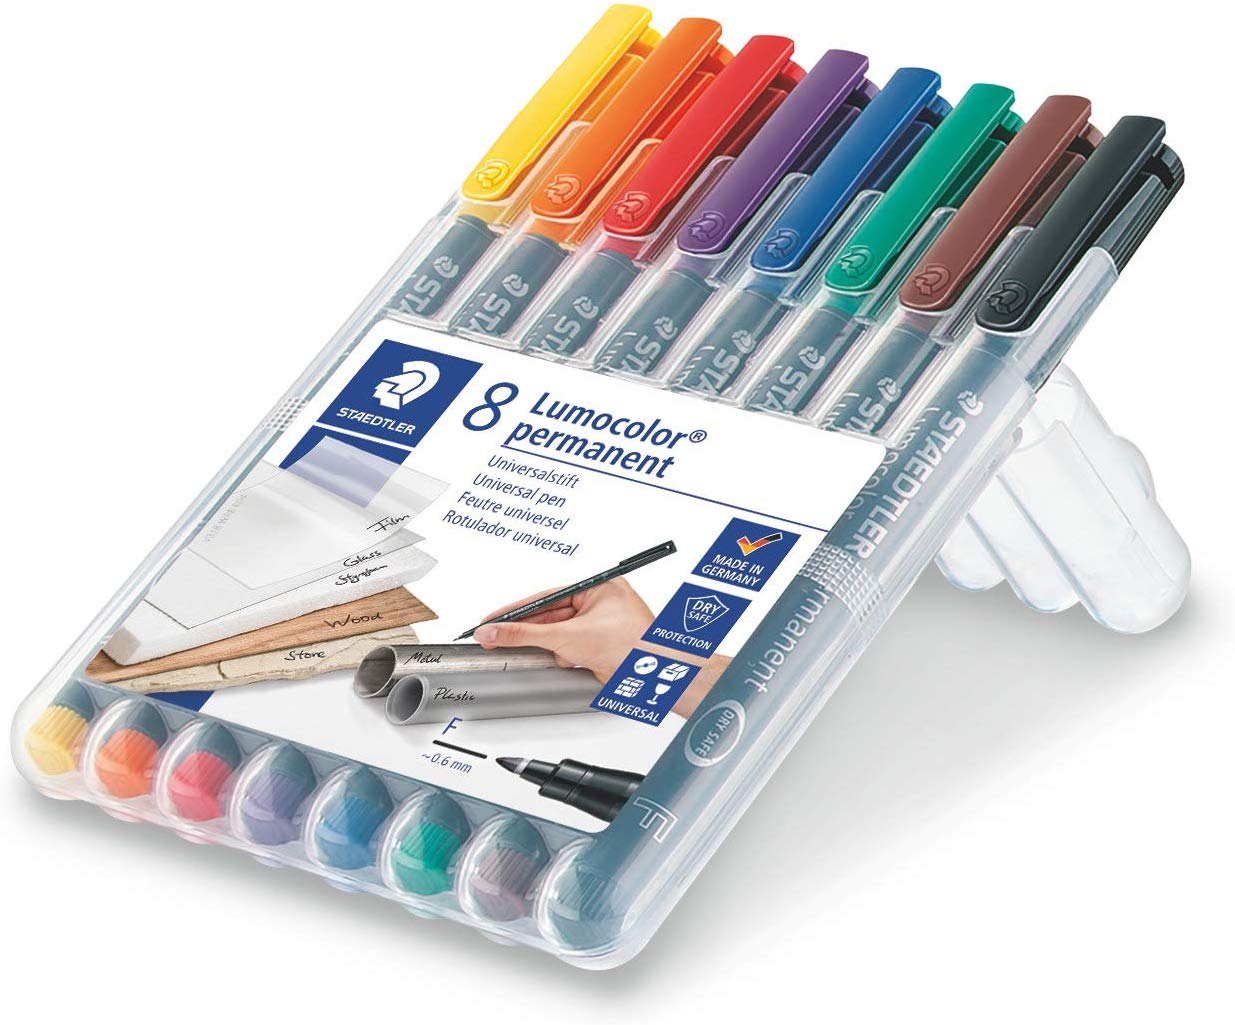 Lumocolor Permanent Markers - Wyndham Art Supplies